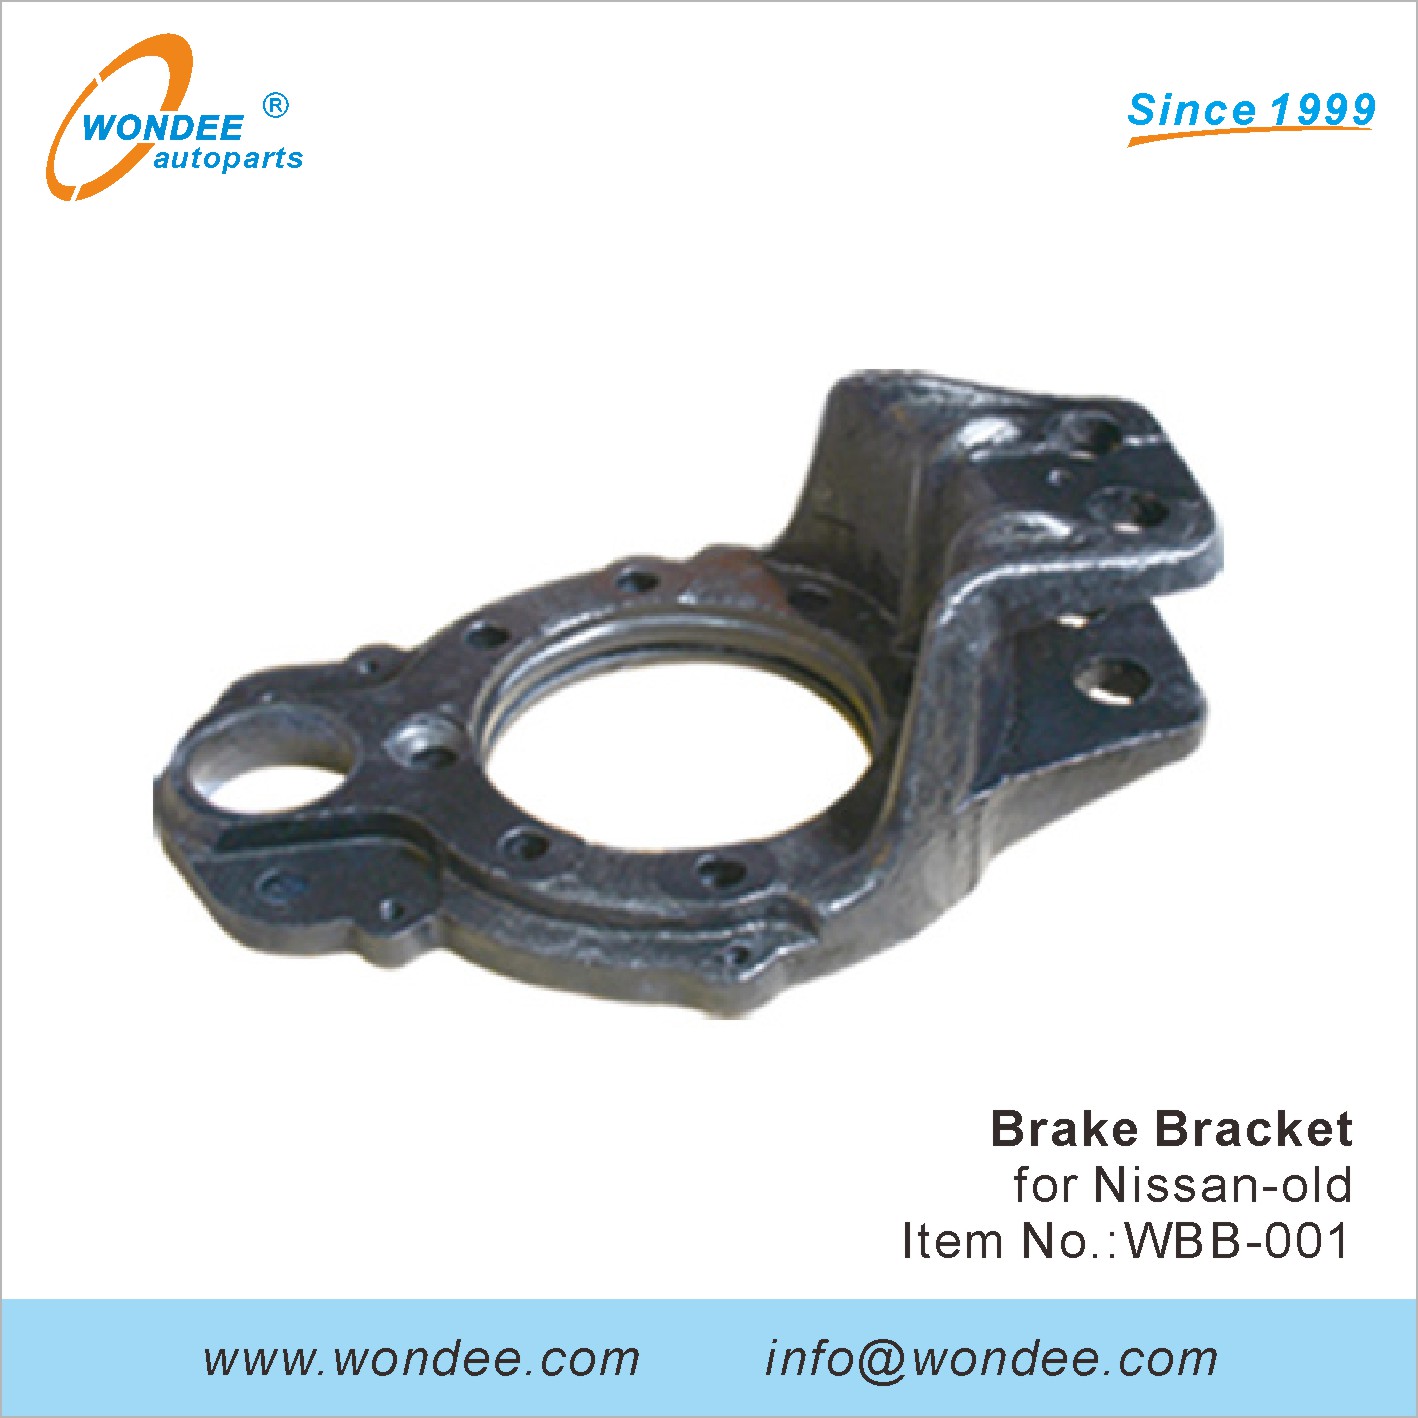 WONDEE brake bracket (1)